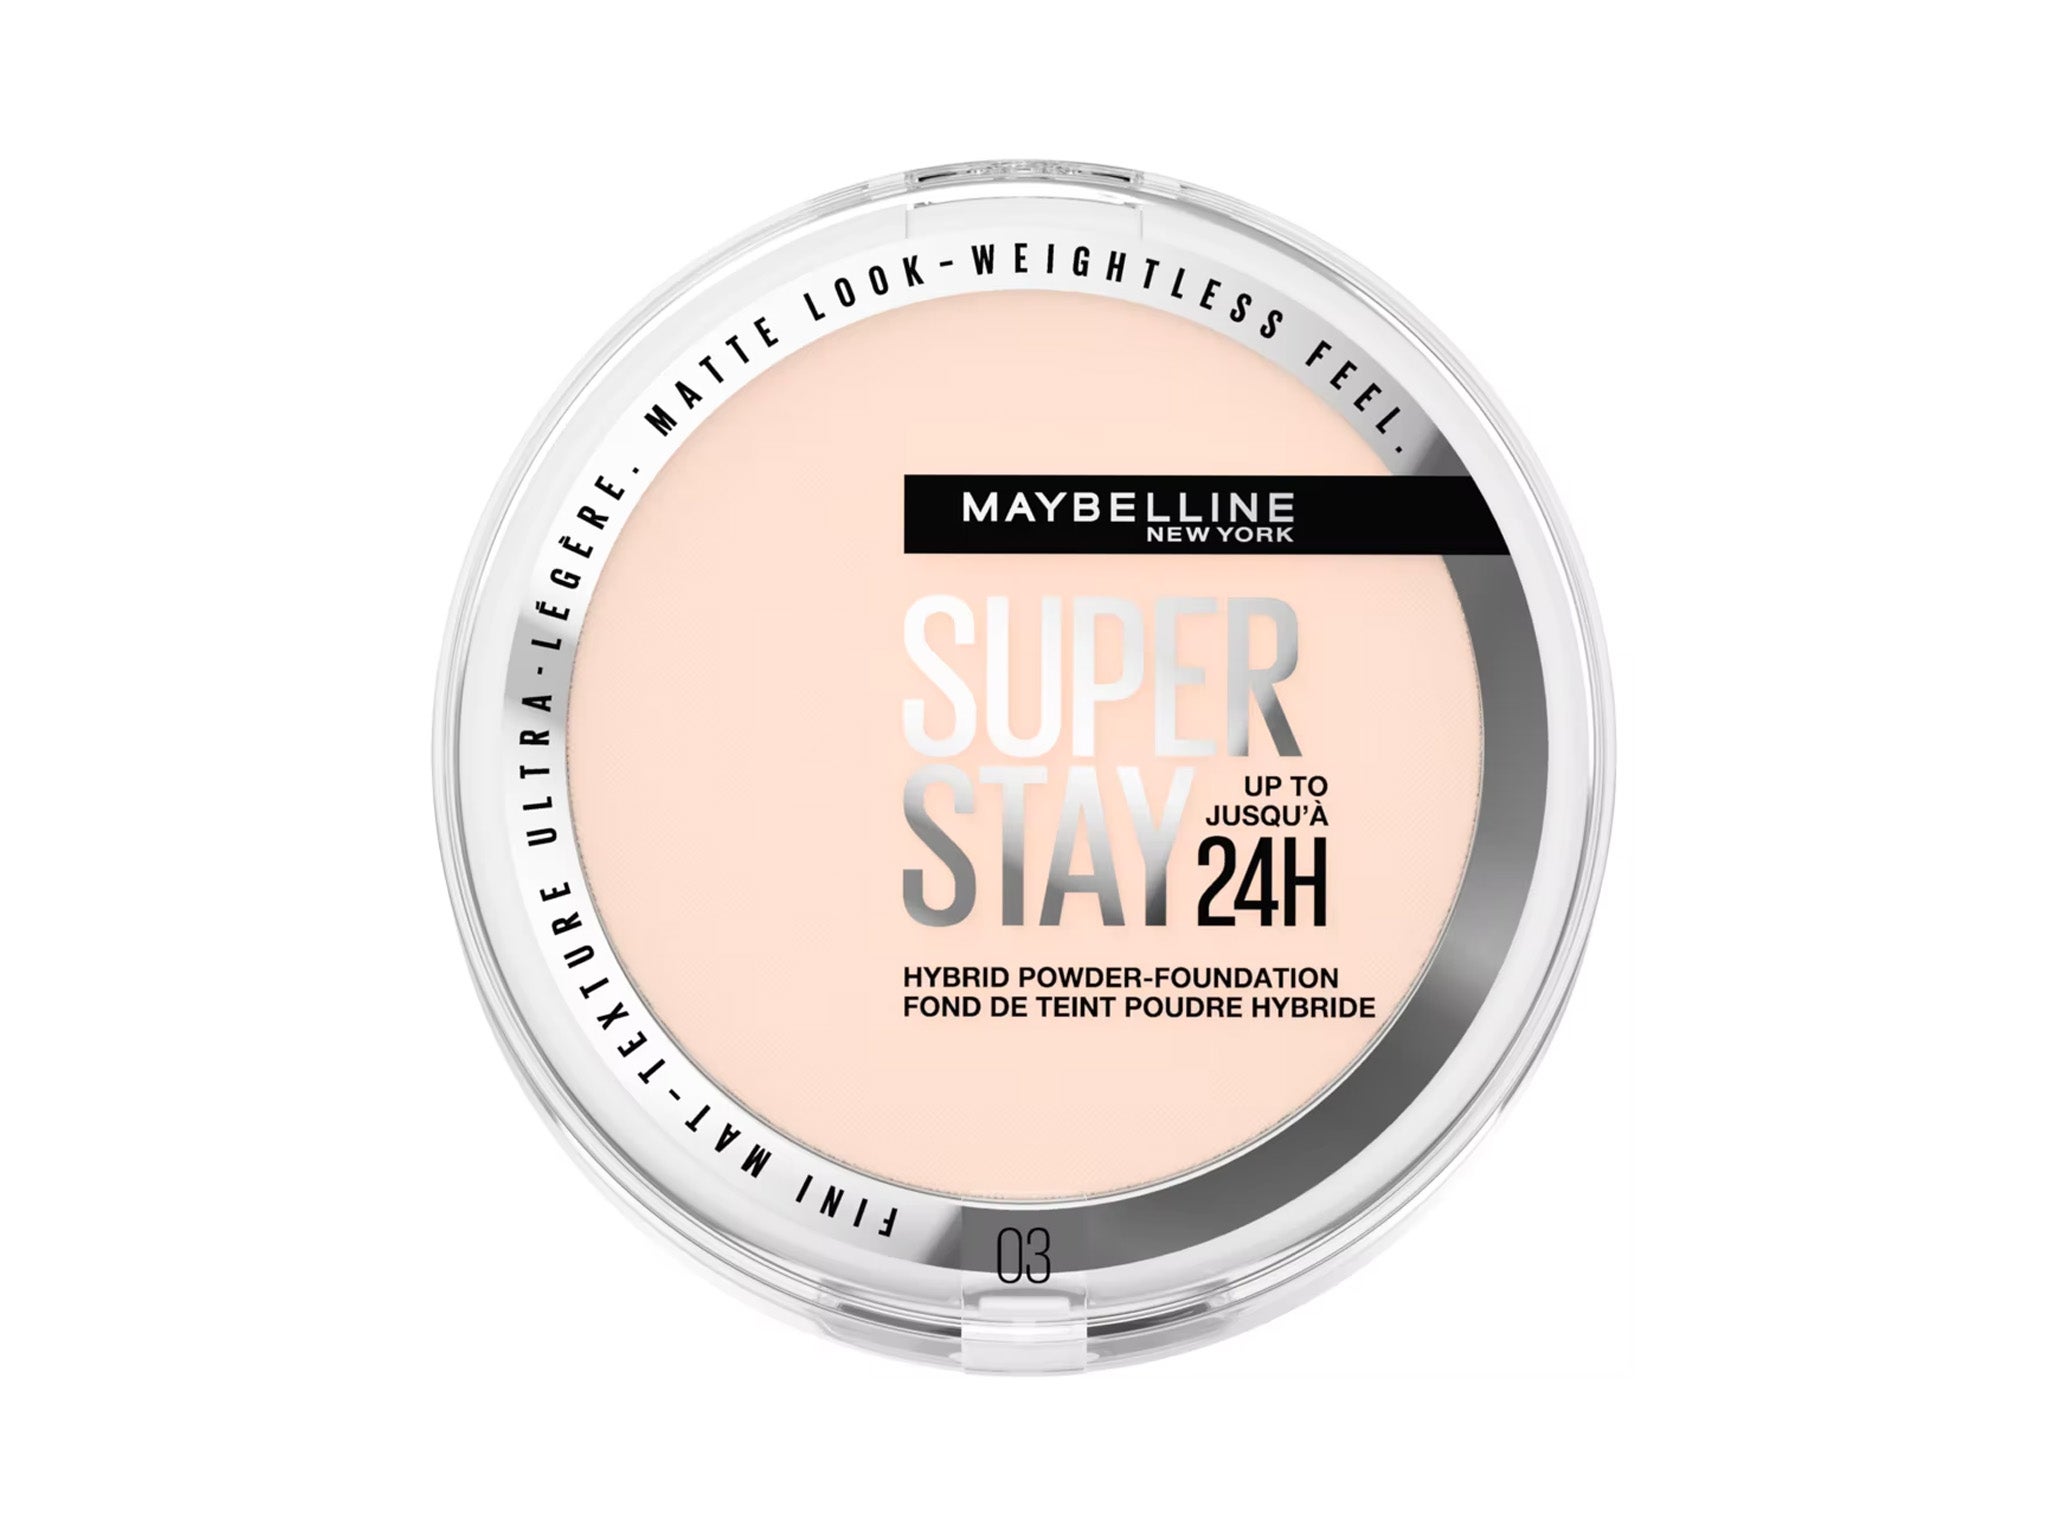 Maybelline SuperStay hybrid powder foundation